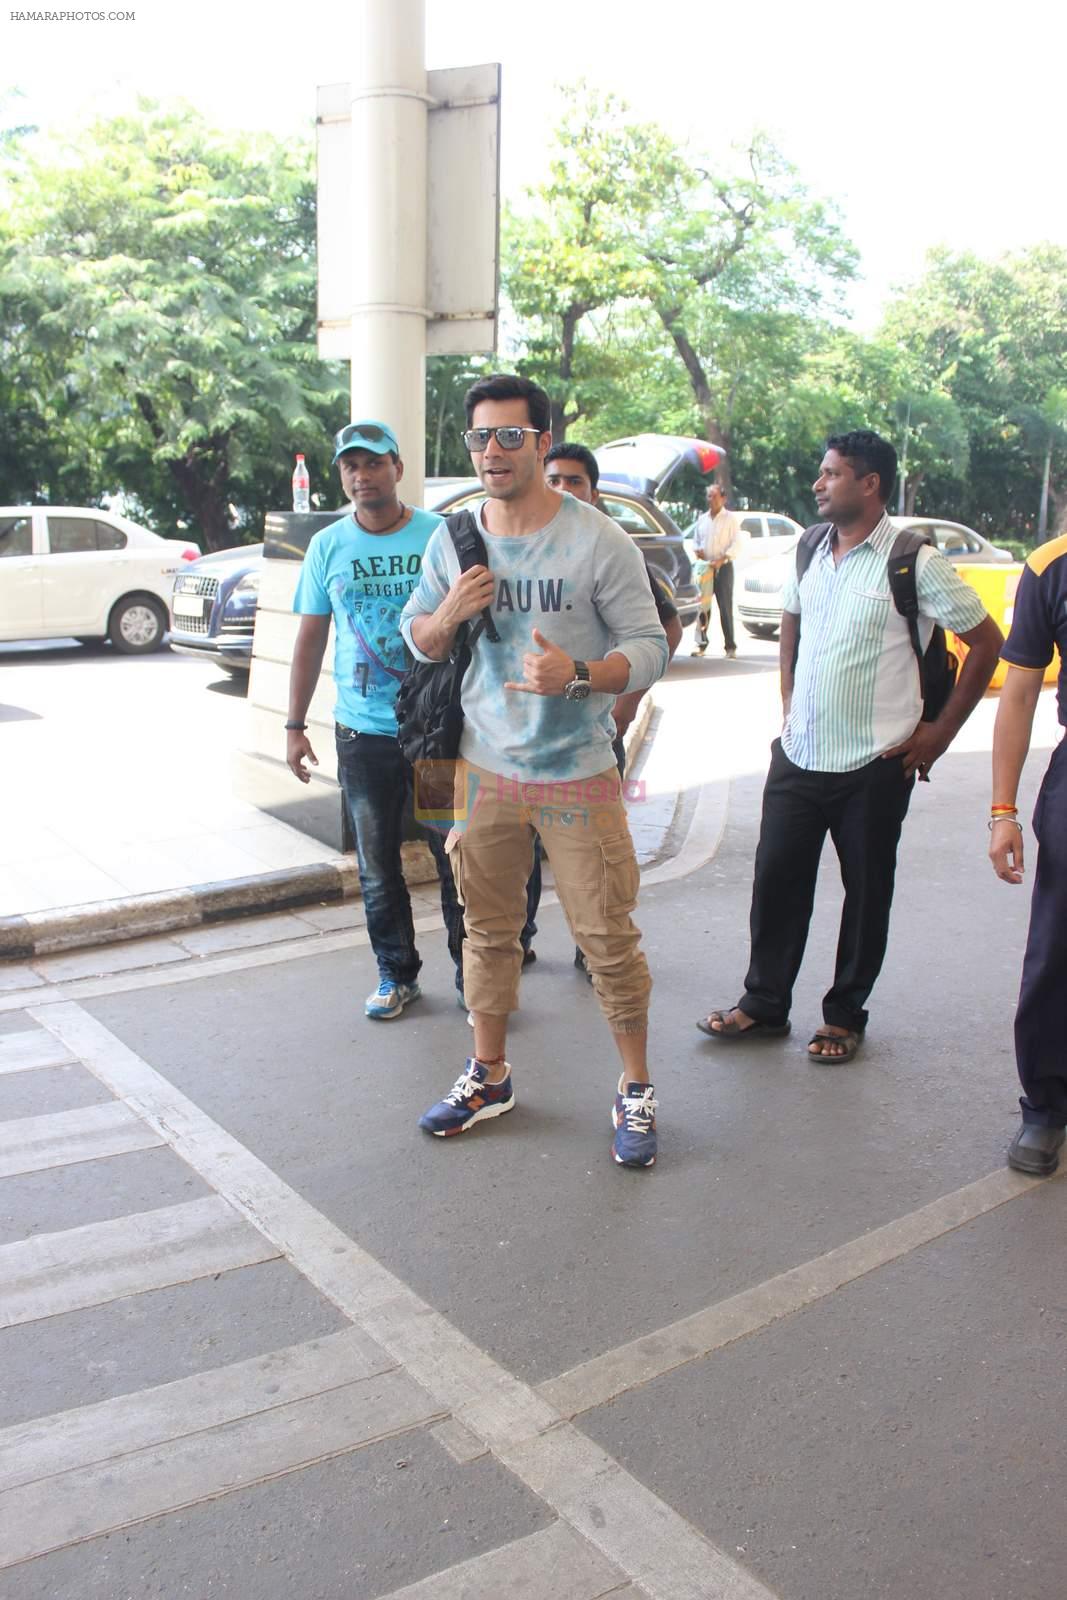 Varun Dhawan snapped at airport  on 5th Sept 2015